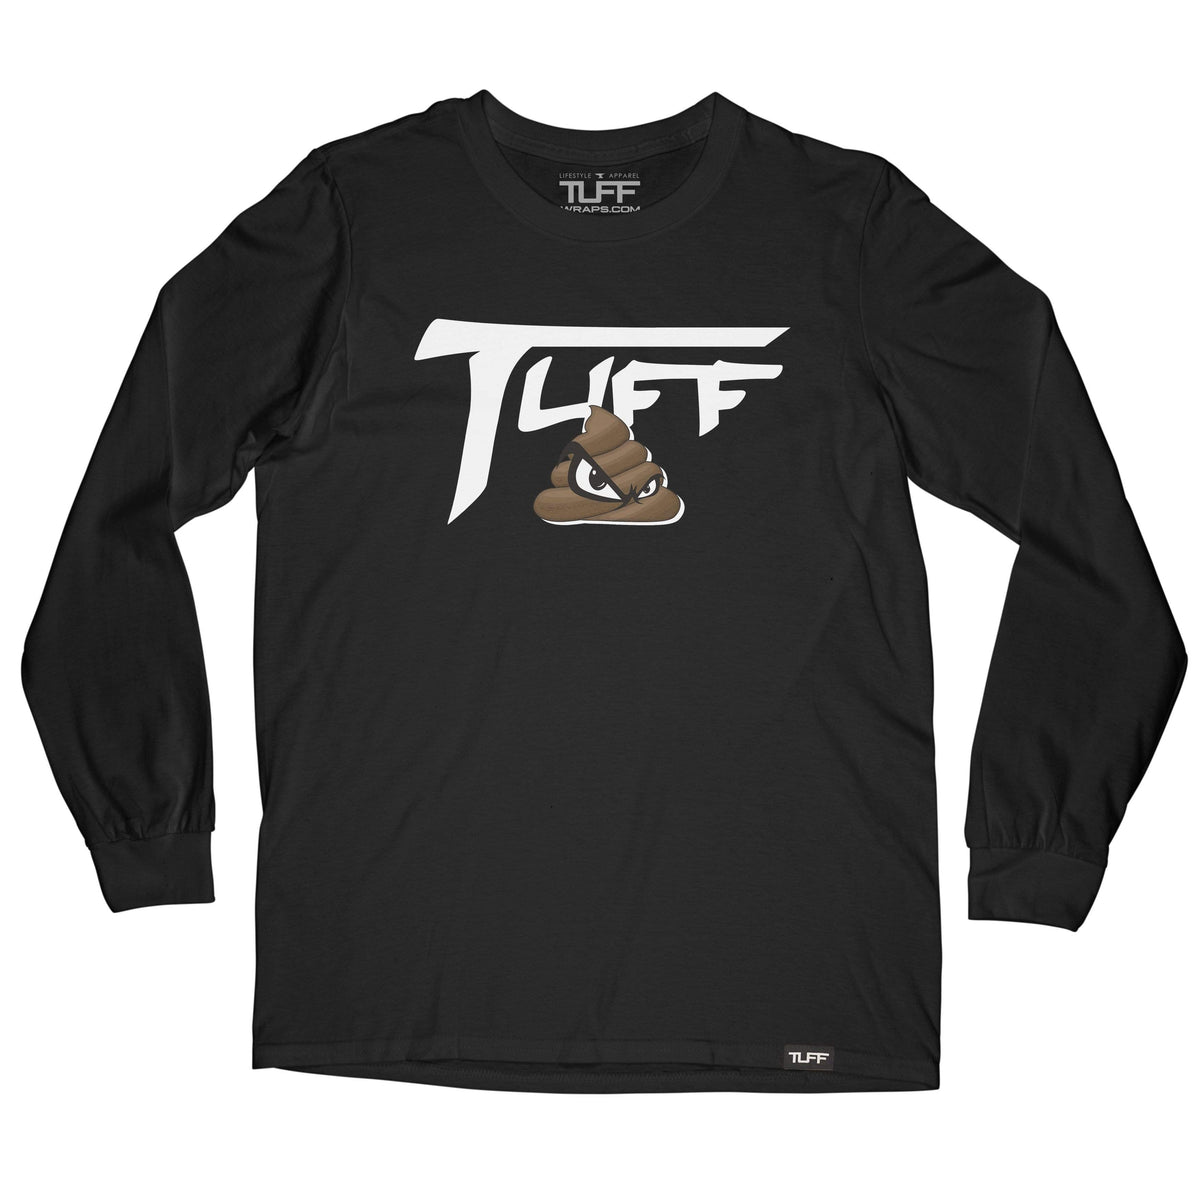 TUFF SH*T Long Sleeve Tee S / Black TuffWraps.com